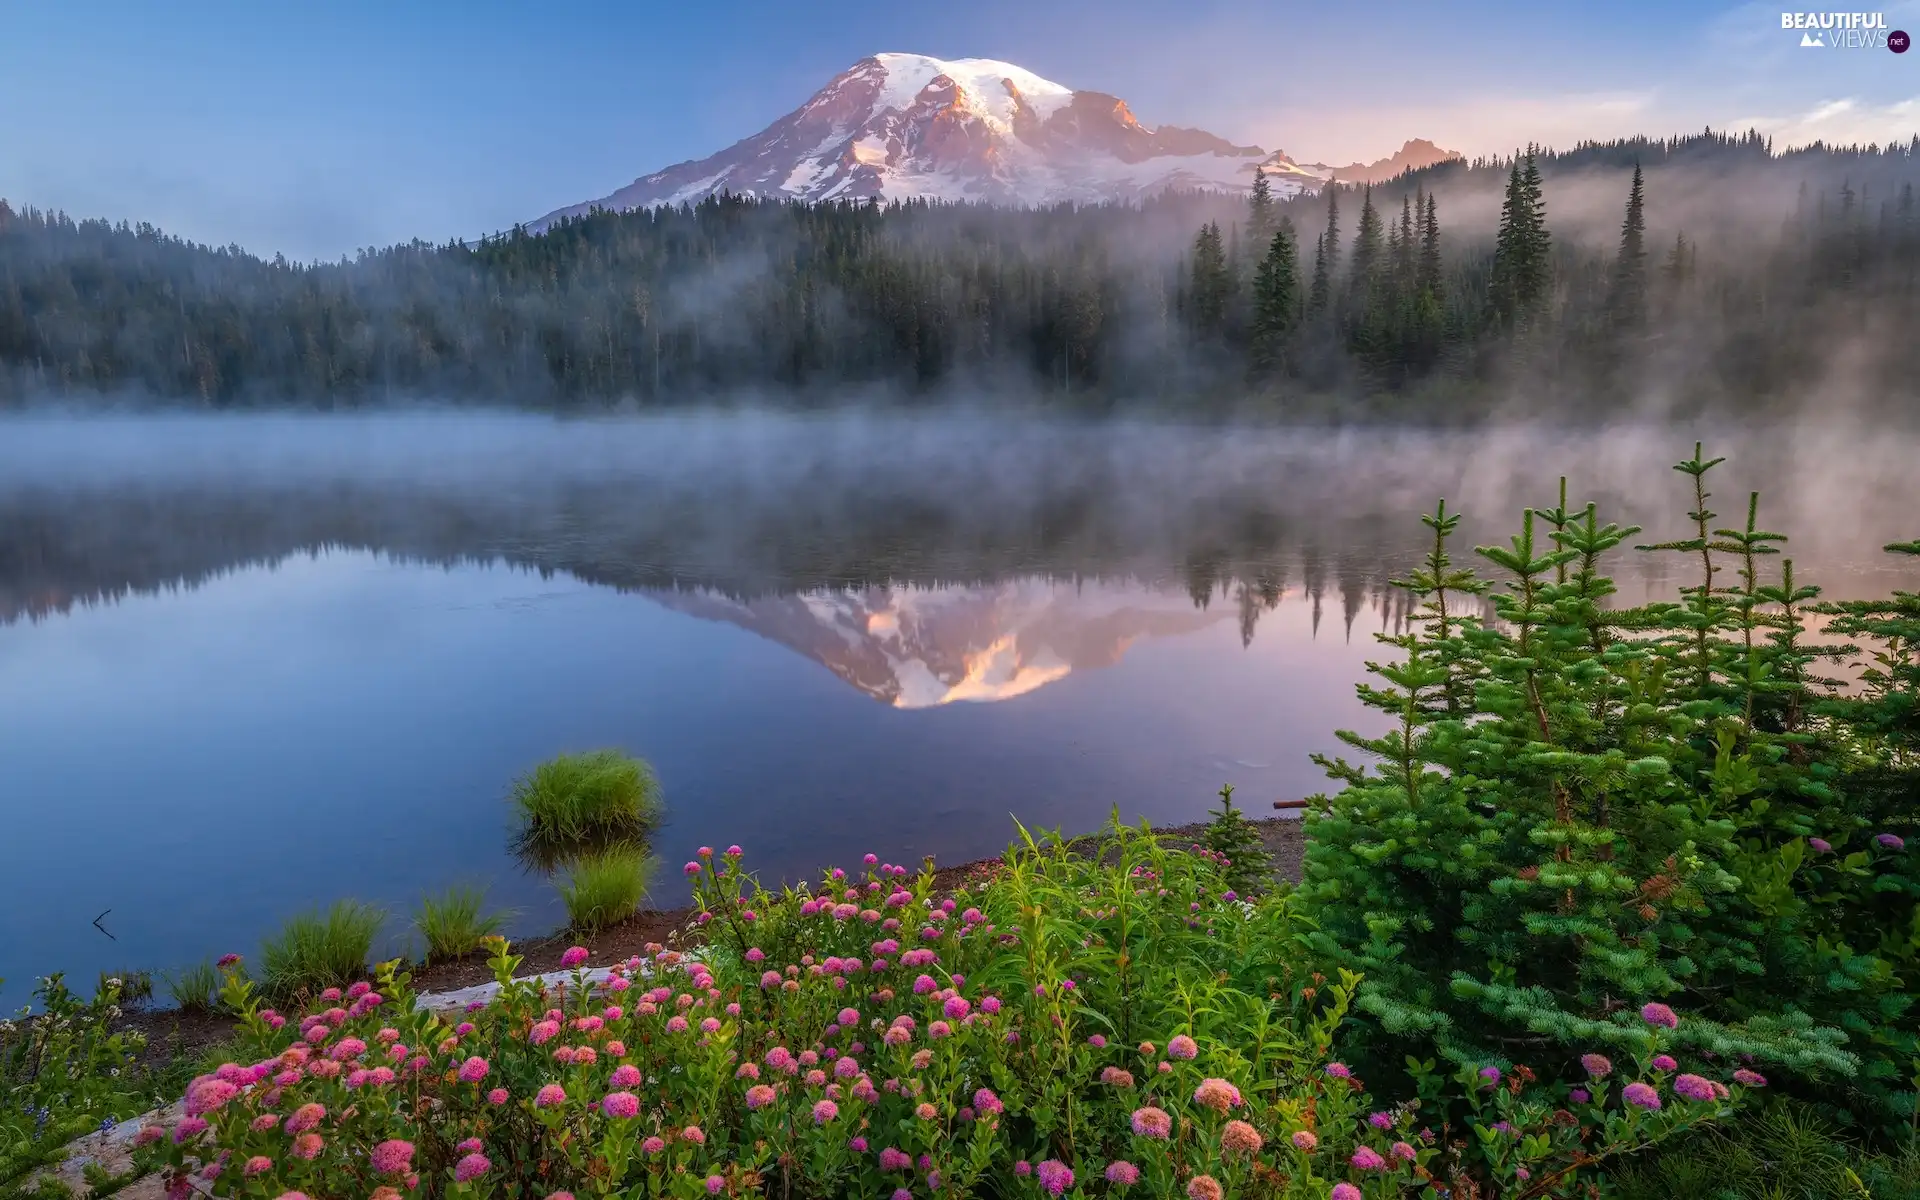 trees, Mount Rainier National Park, Flowers, viewes, reflection, The United States, Washington State, Stratovolcano Mount Rainier, Mountains, Fog, lake